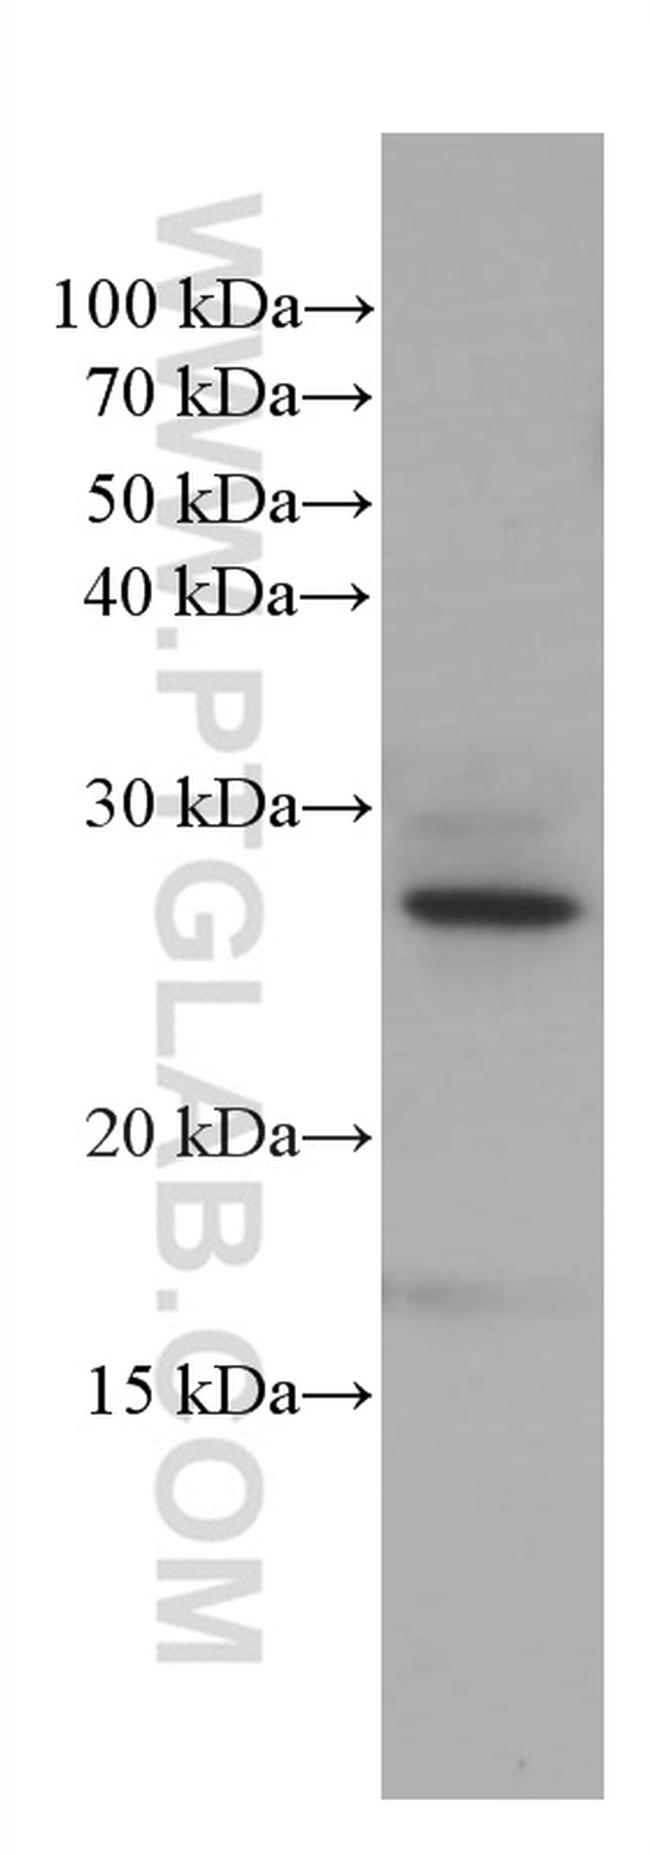 PEBP1 Antibody in Western Blot (WB)